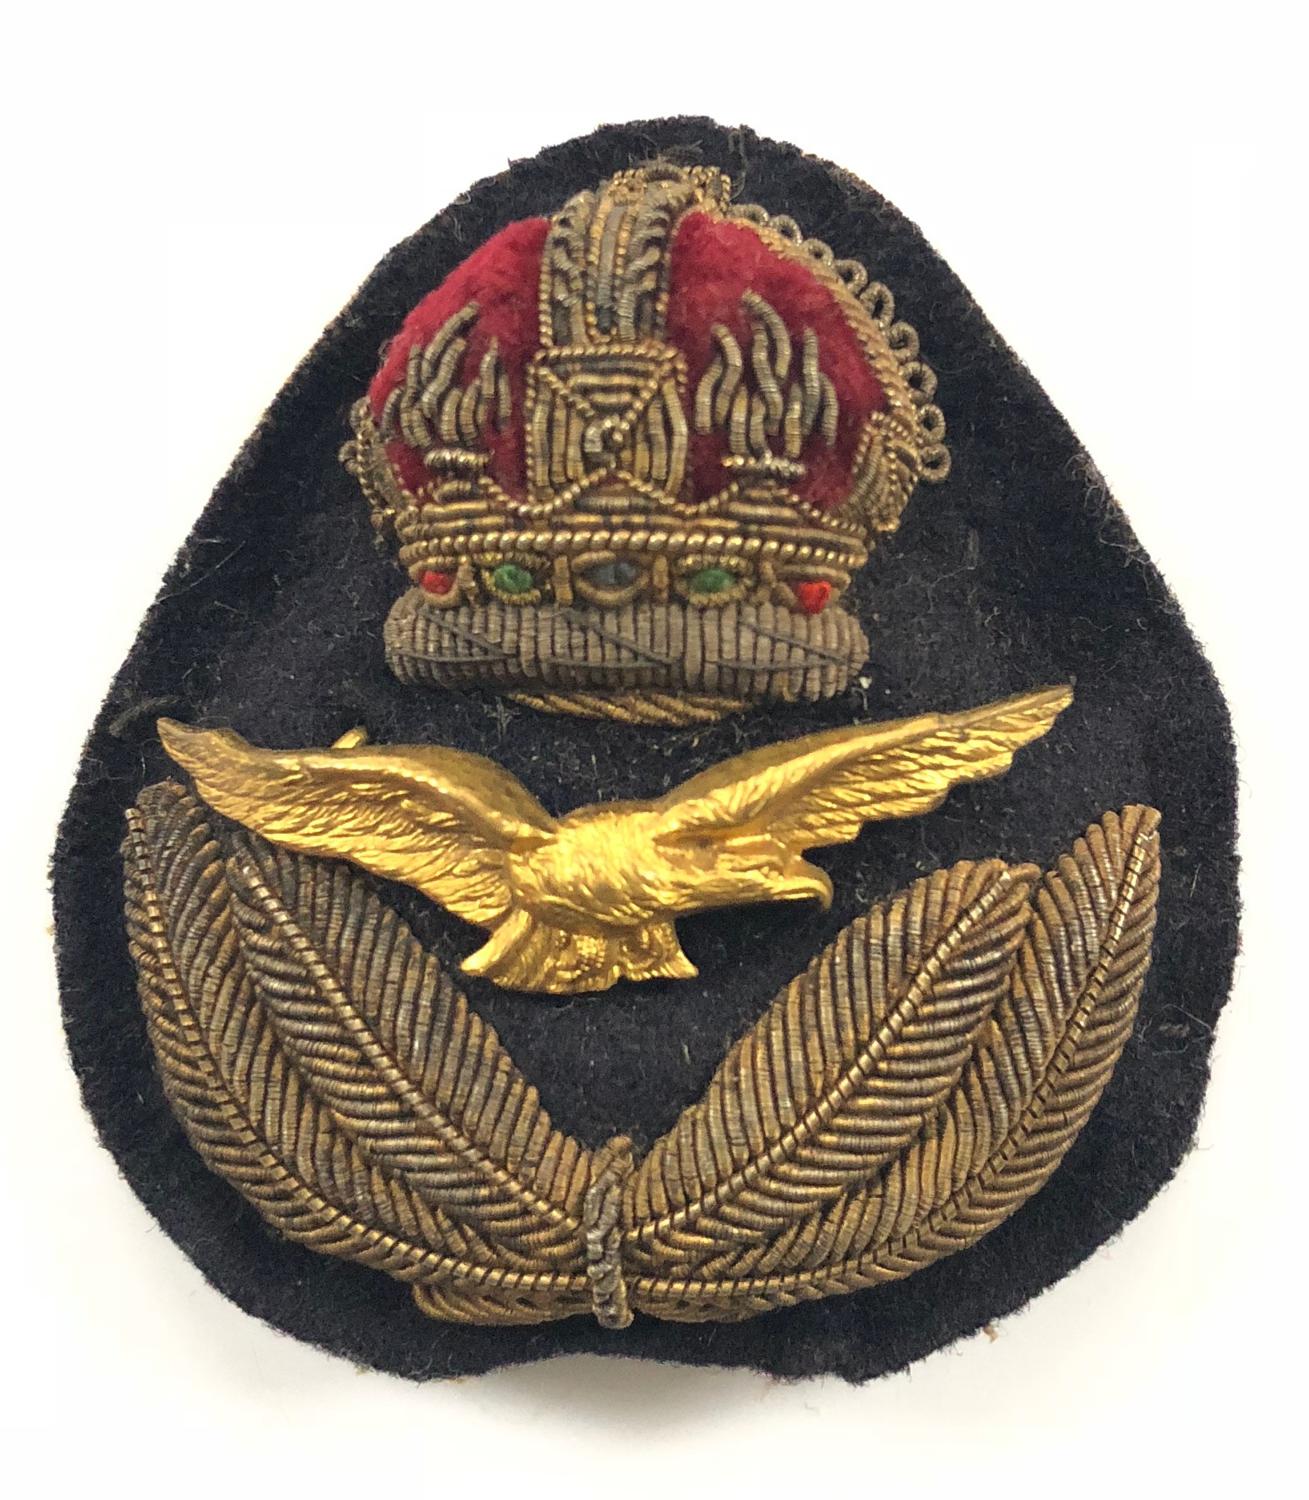 RAF Interwar / Early WW2 Officer’s Cap Badge.